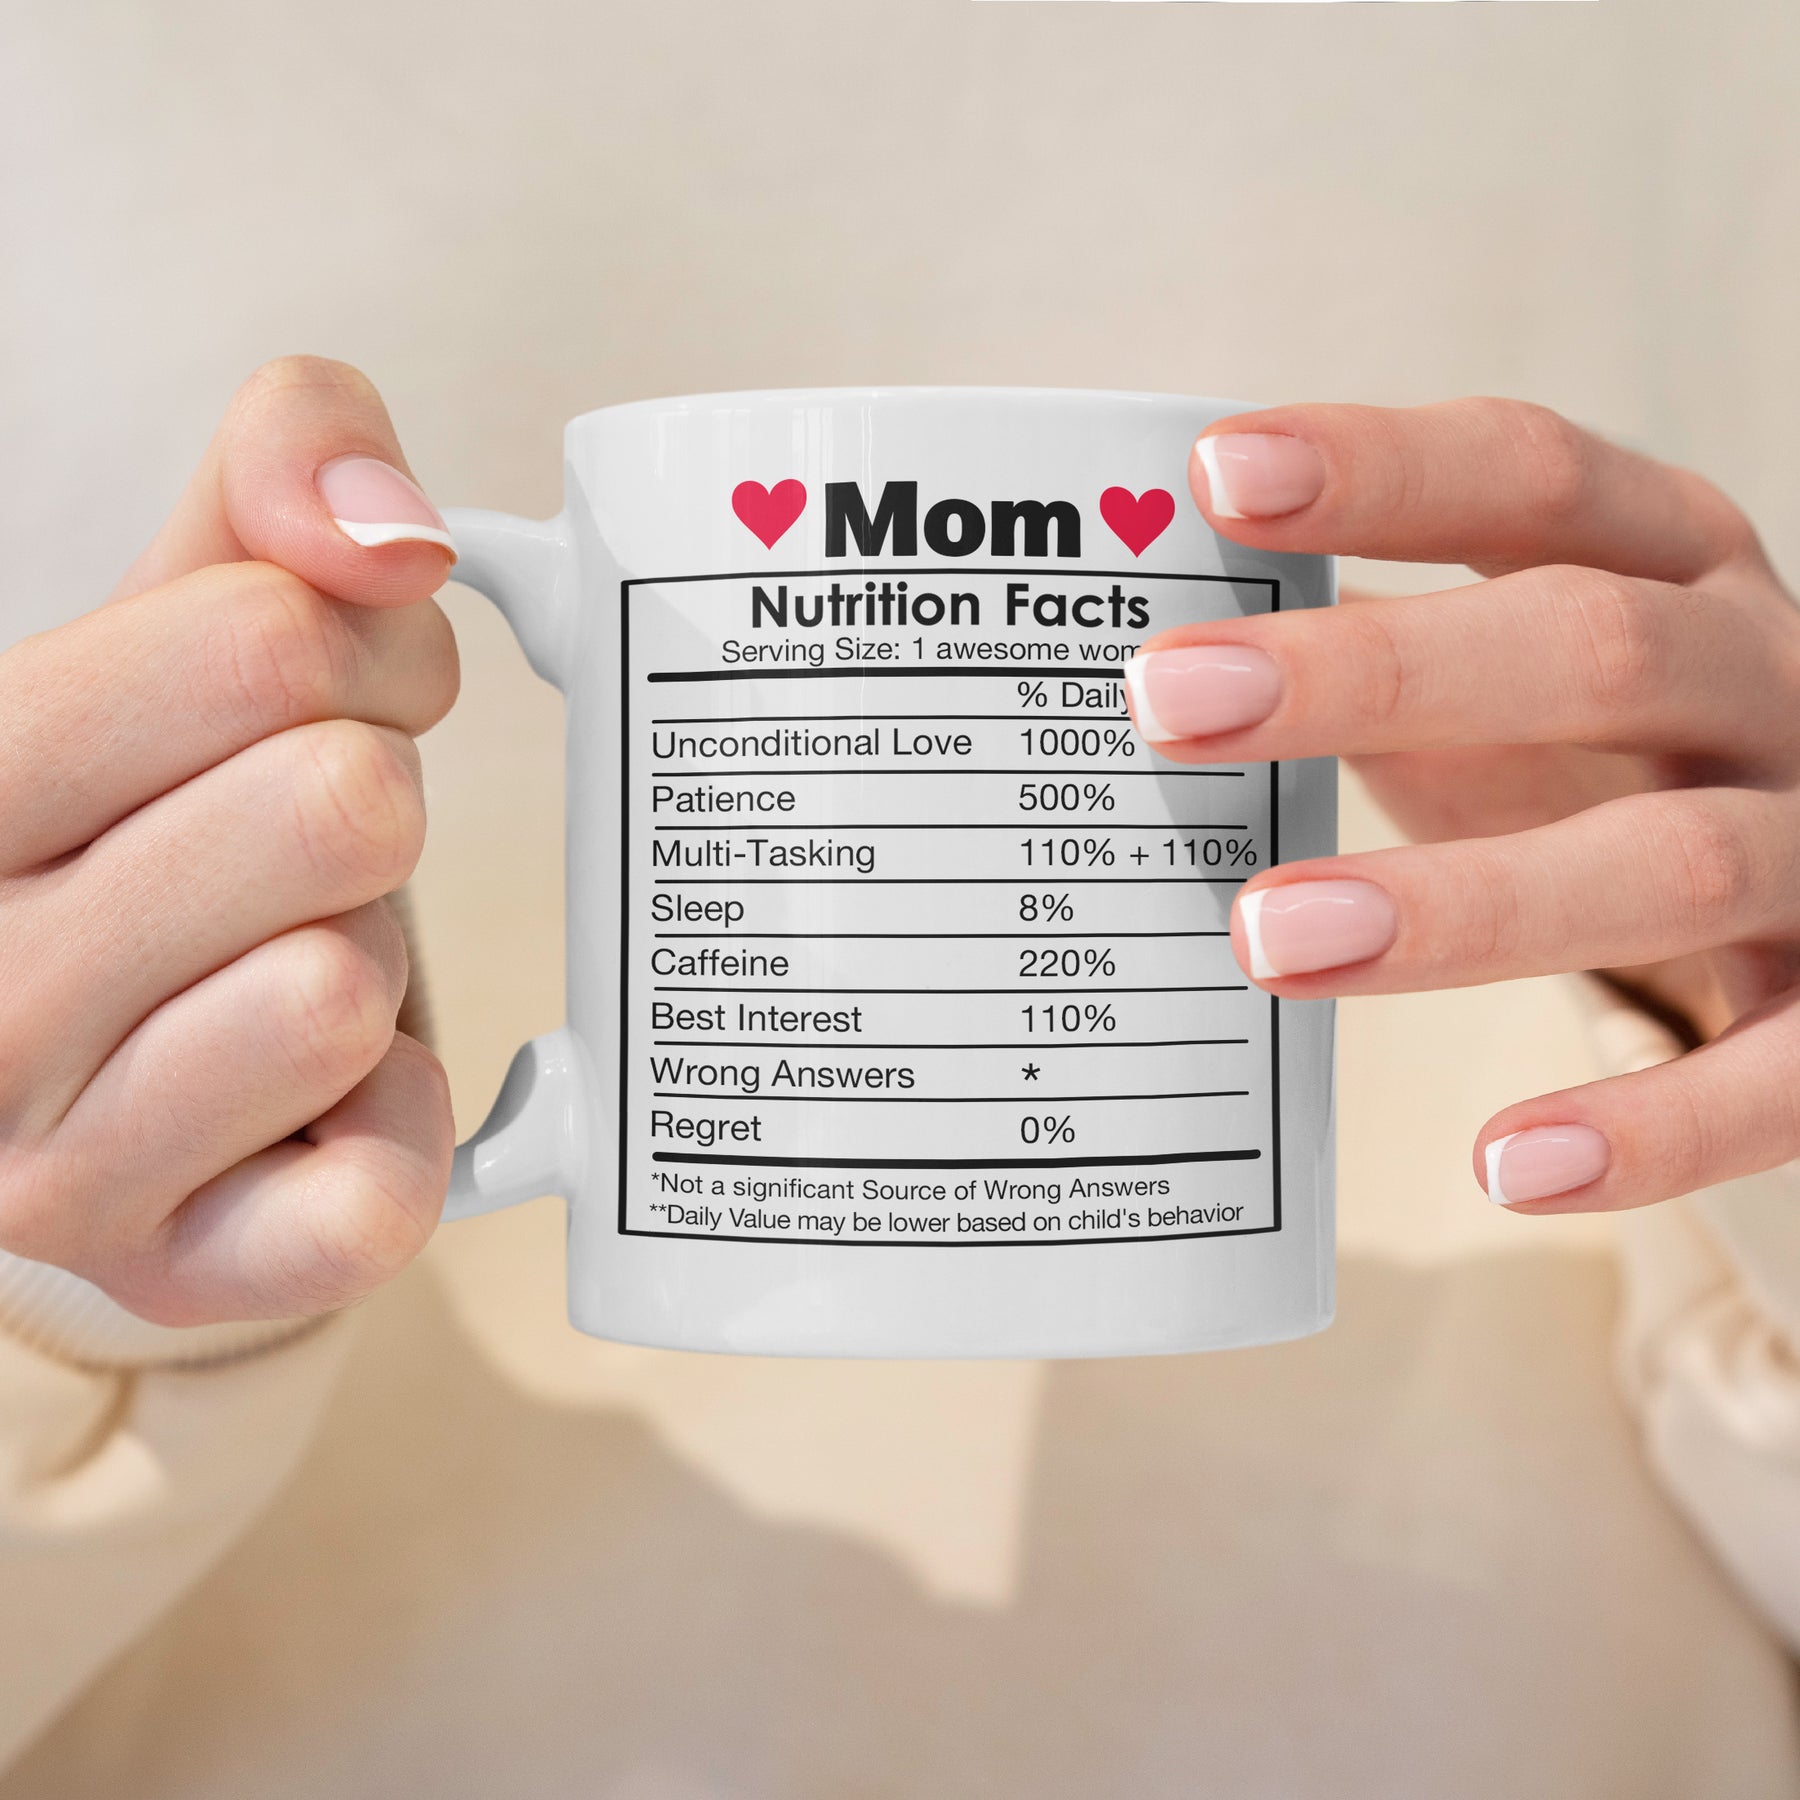 “Nutrition Facts” Large 15oz Mug - Funny Gift for Mom, Grandma